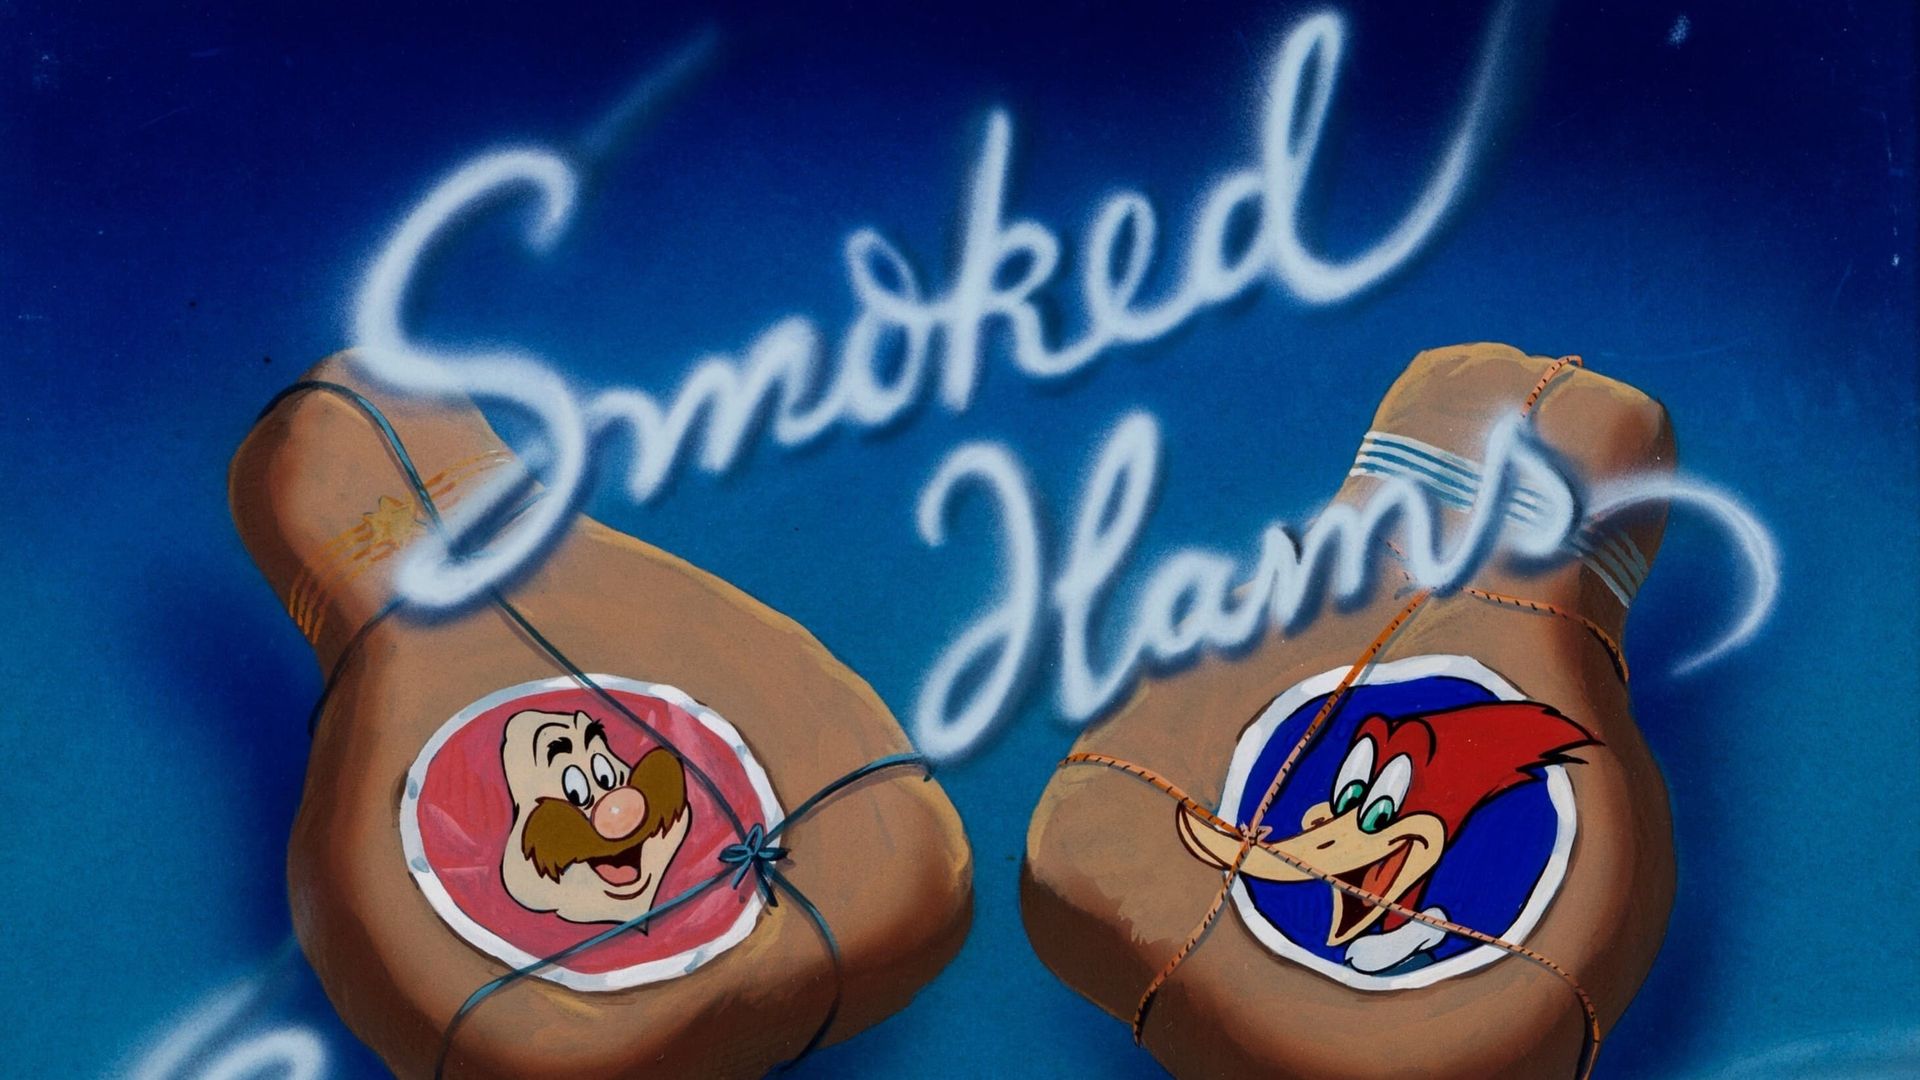 Smoked Hams background